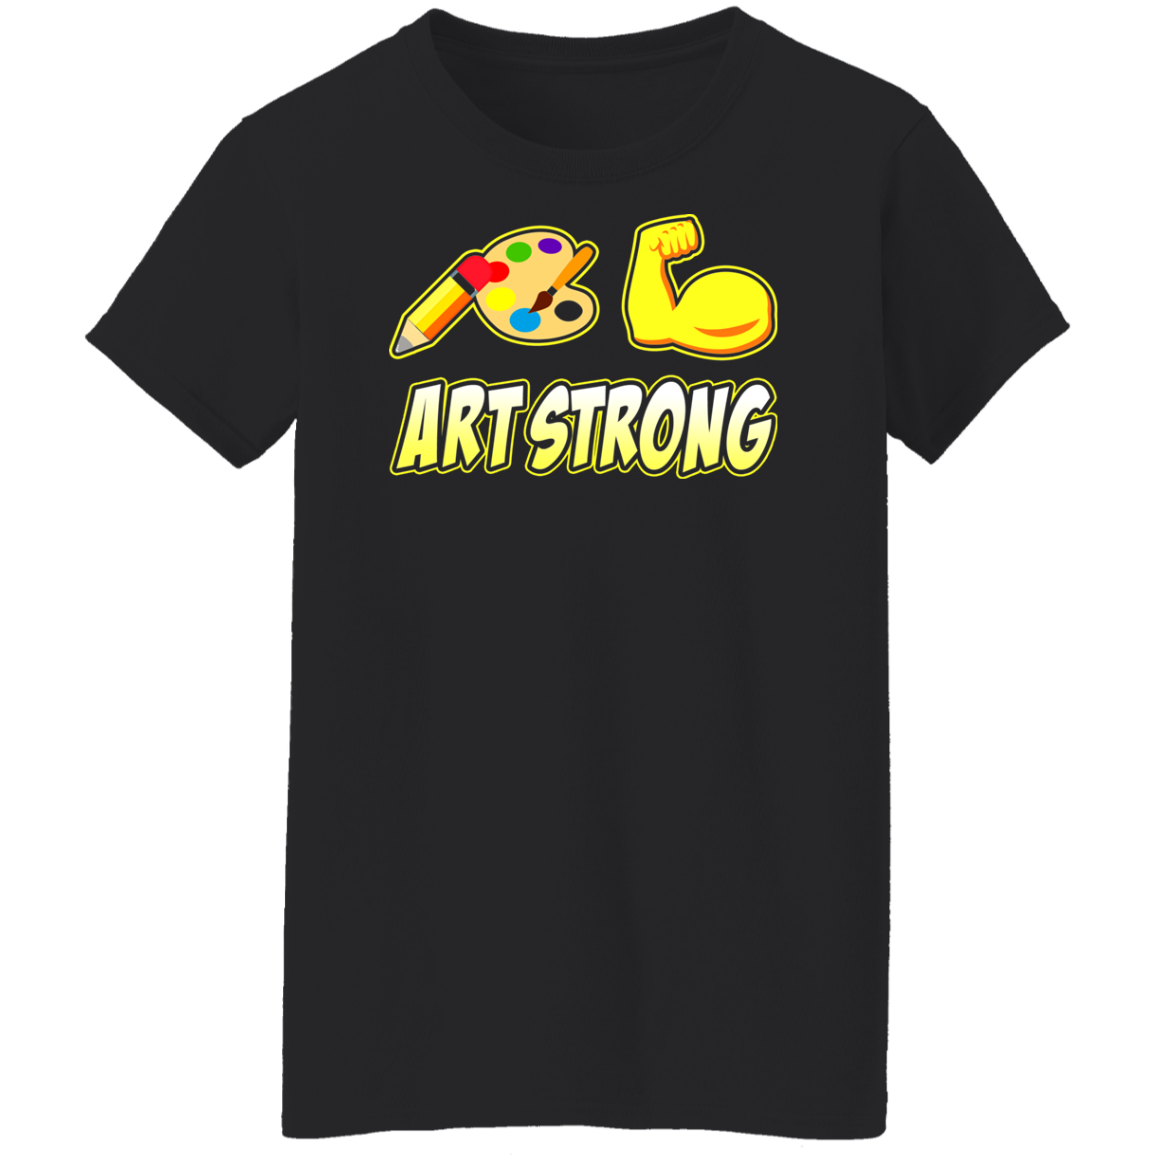 ArtichokeUSA Custom Design. Art Strong. Ladies' 5.3 oz. T-Shirt